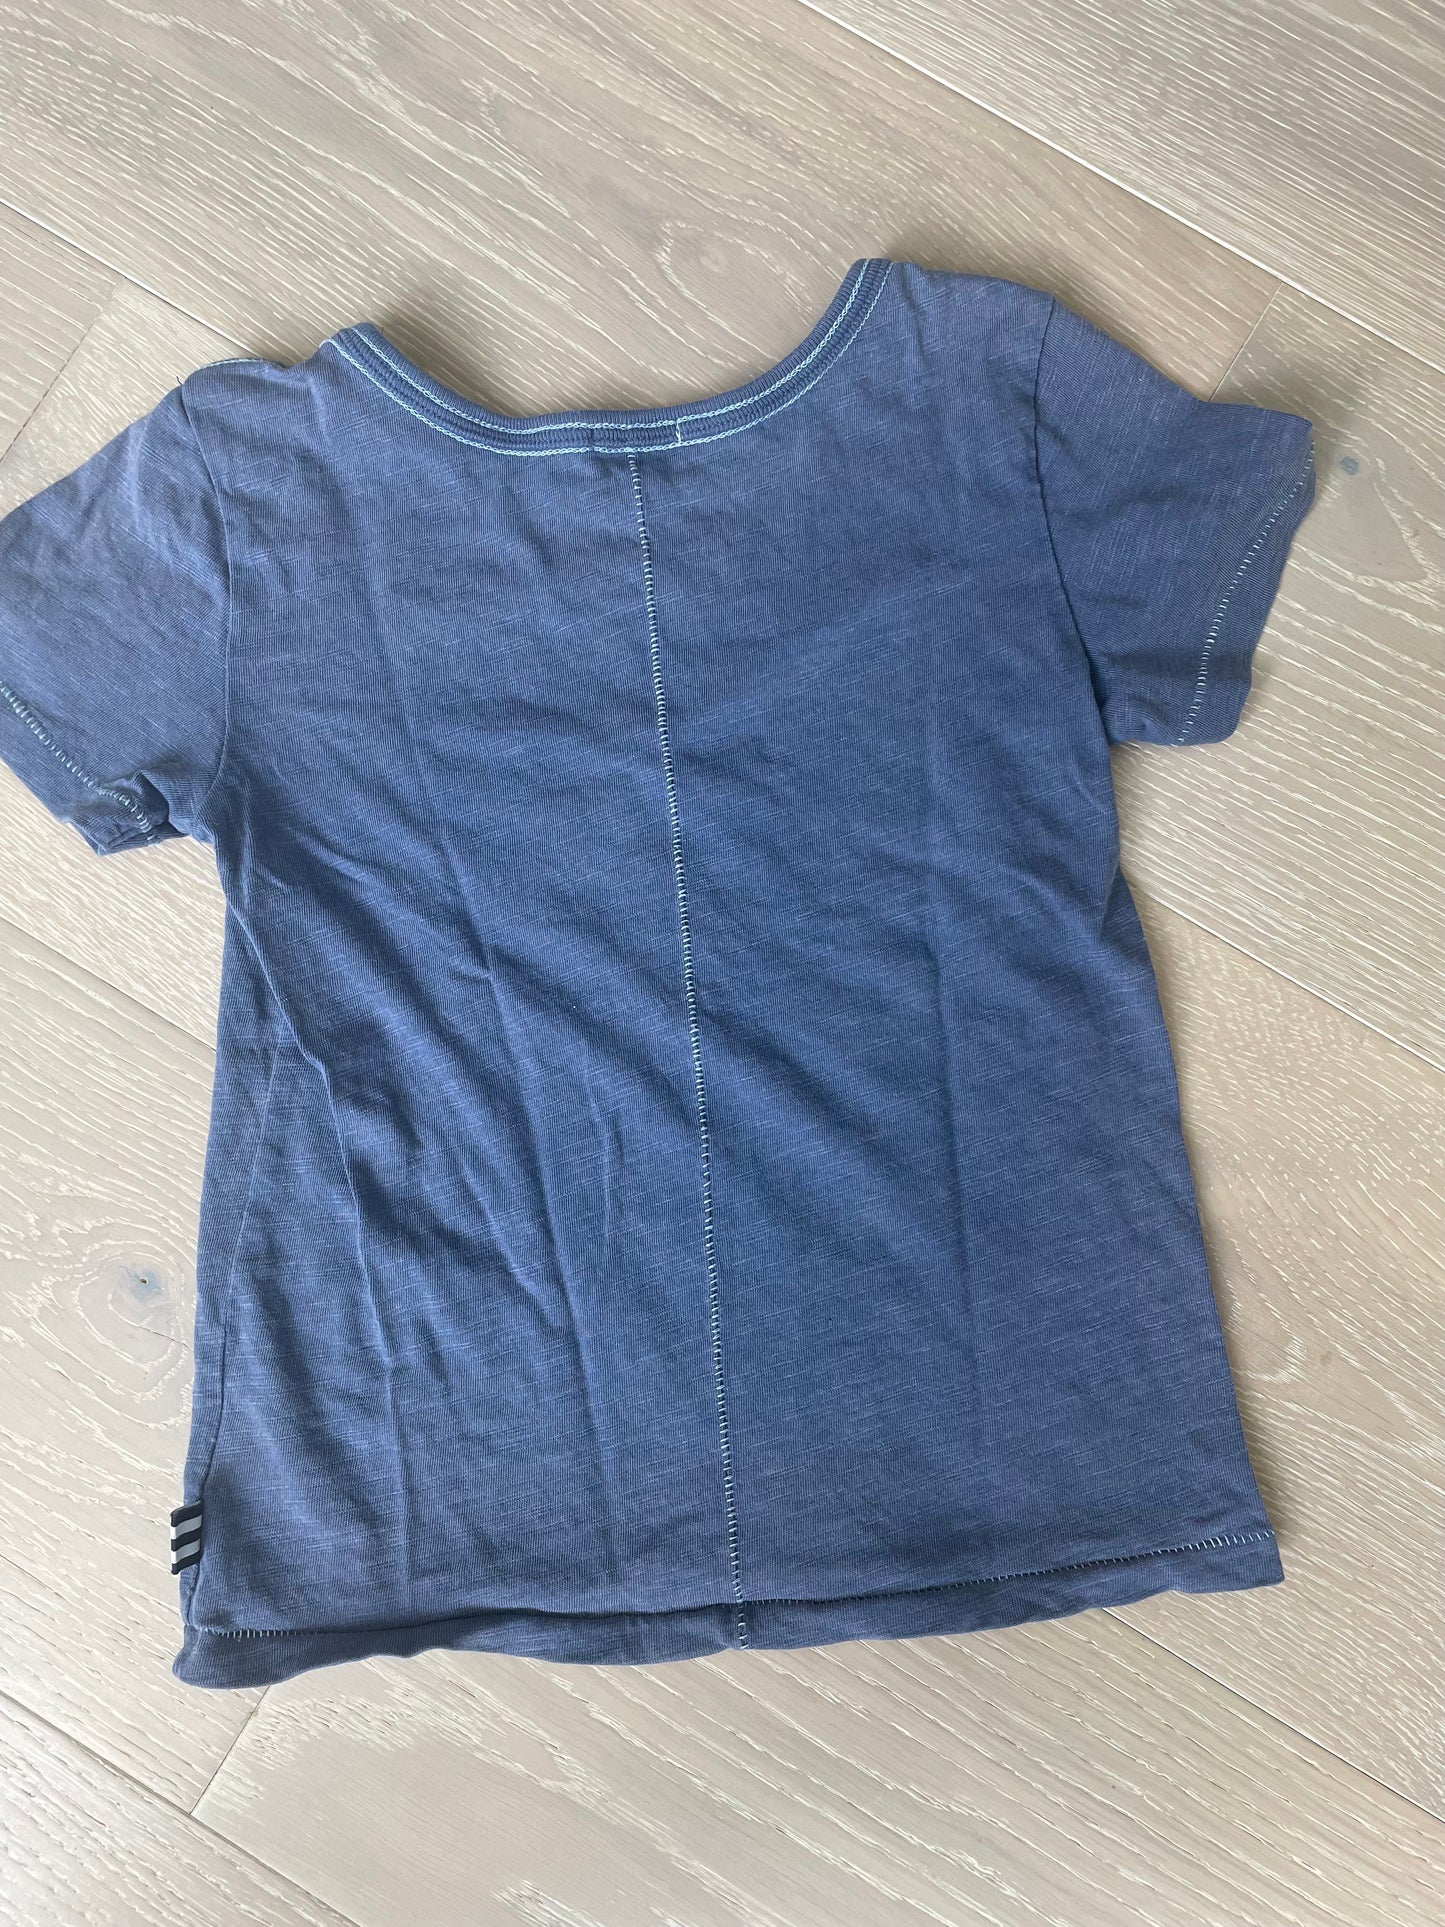 Splendid - Toddler Boy Size 4T - Blue tshirt 45242